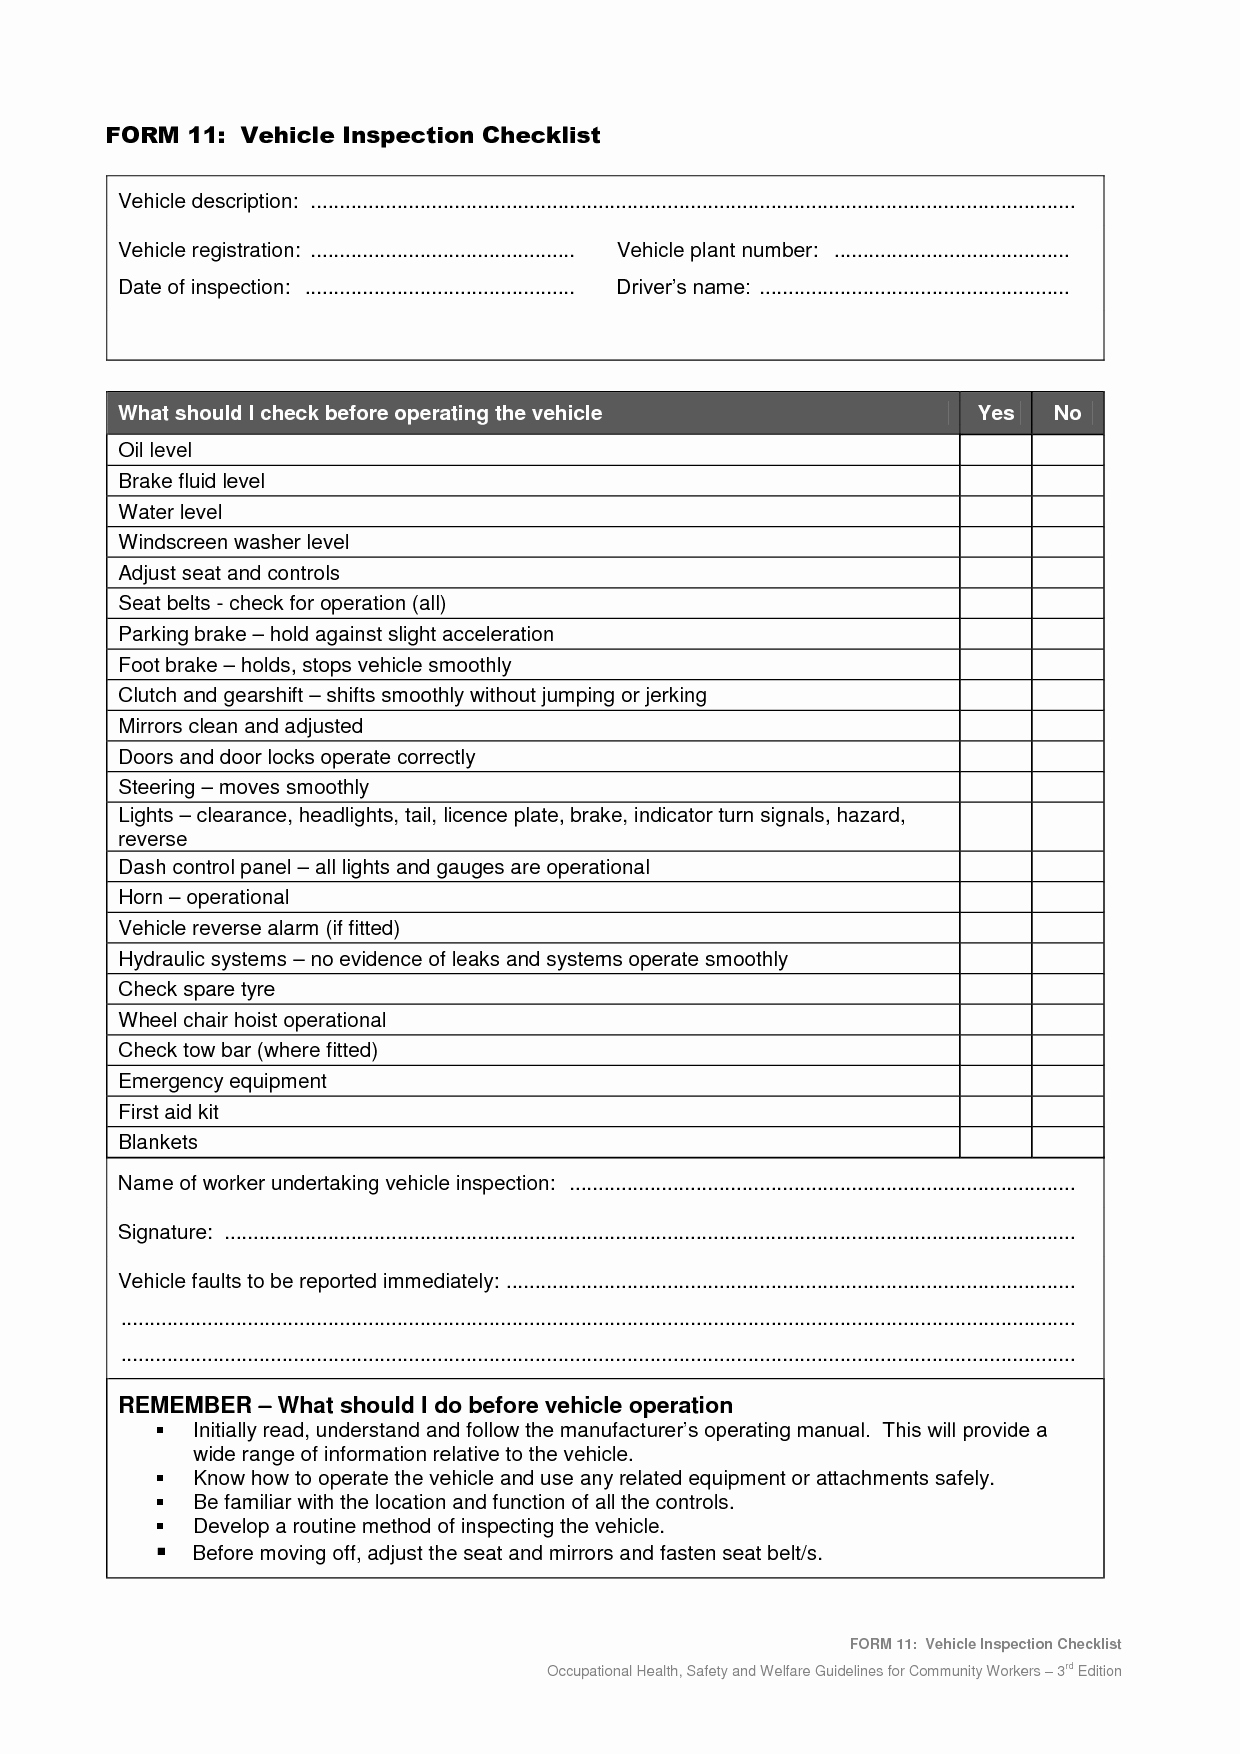 Equipment Inspection Checklist Template Fresh Vehicle Safety Inspection Checklist form